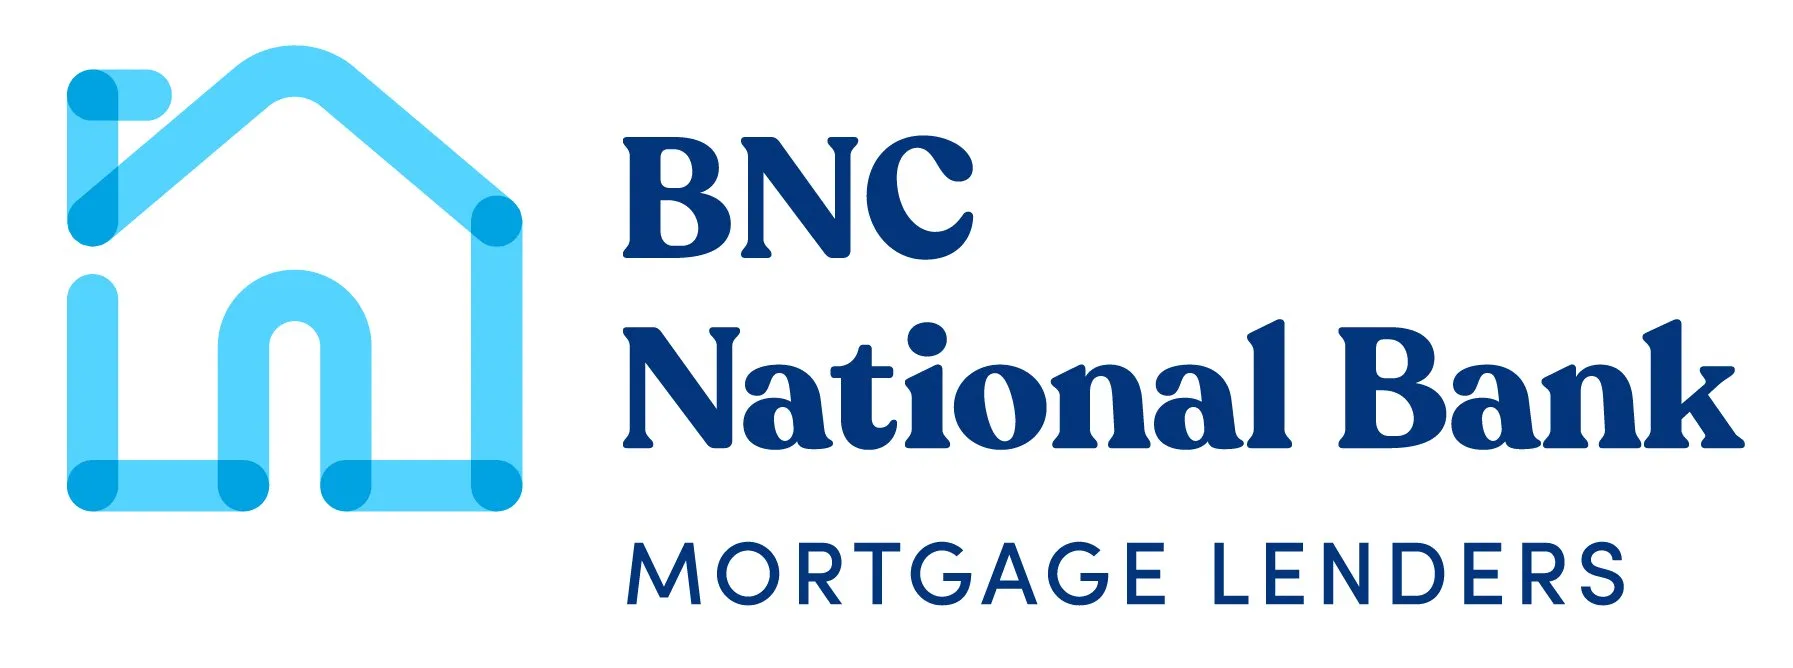 Bnc national bank Mortage lenders